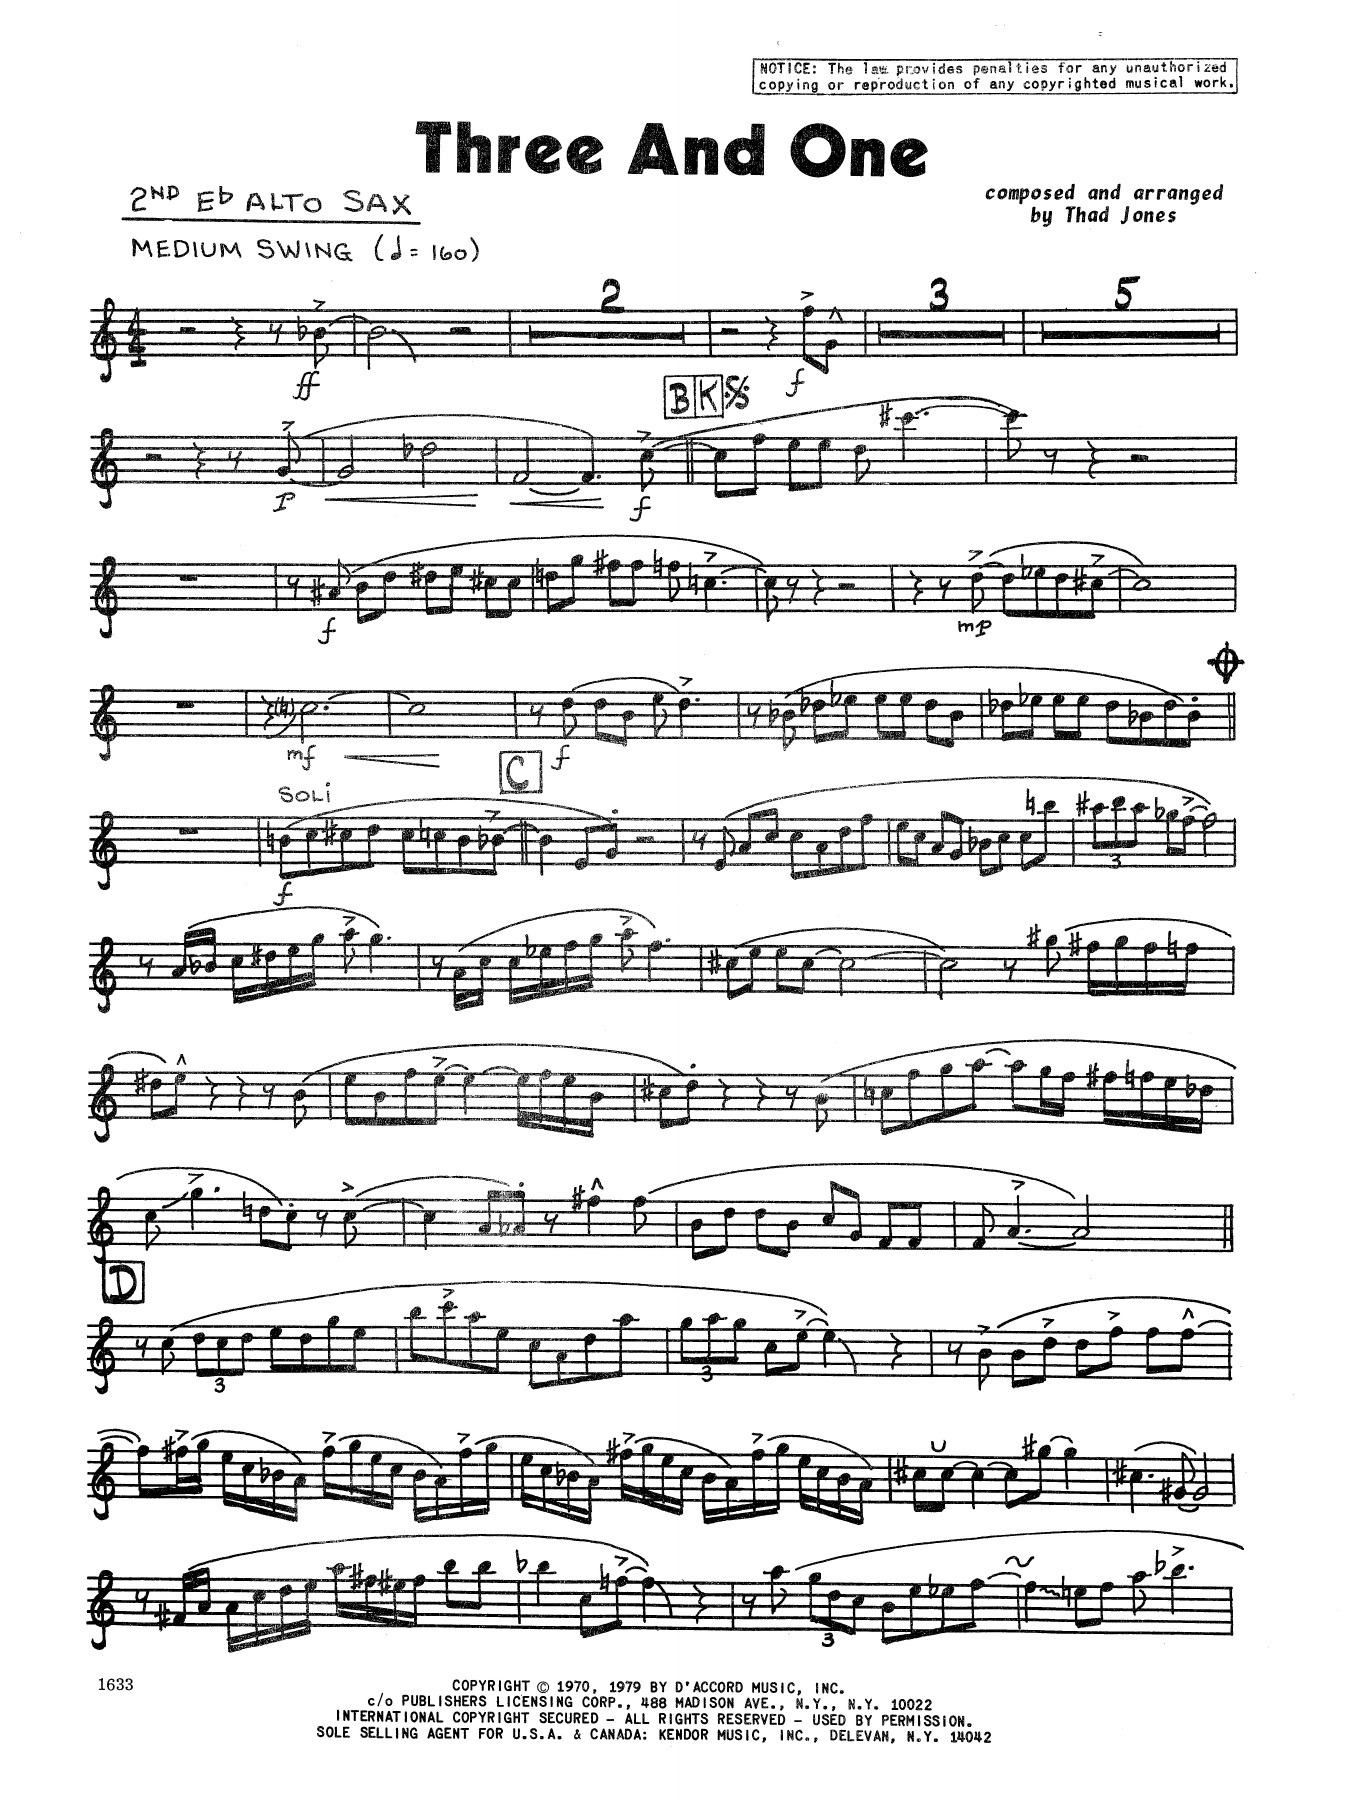 Download Thad Jones Three And One - 1st Tenor Saxophone Sheet Music